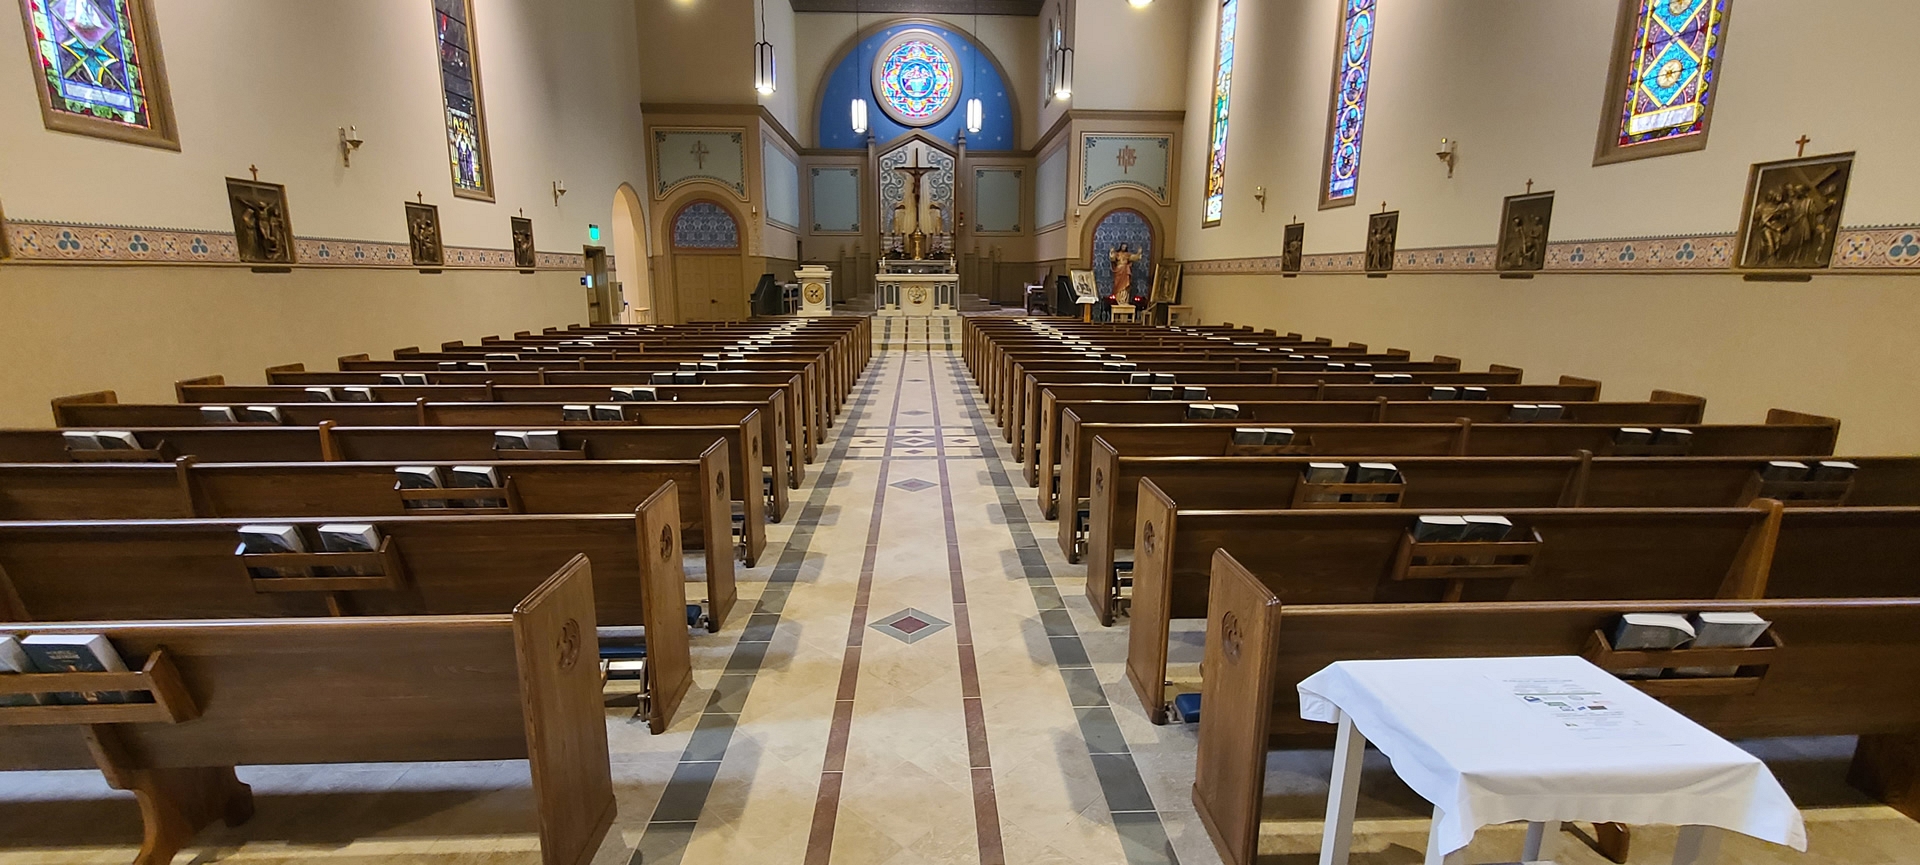 St. Patrick's Catholic Church - Grass Valley, CA